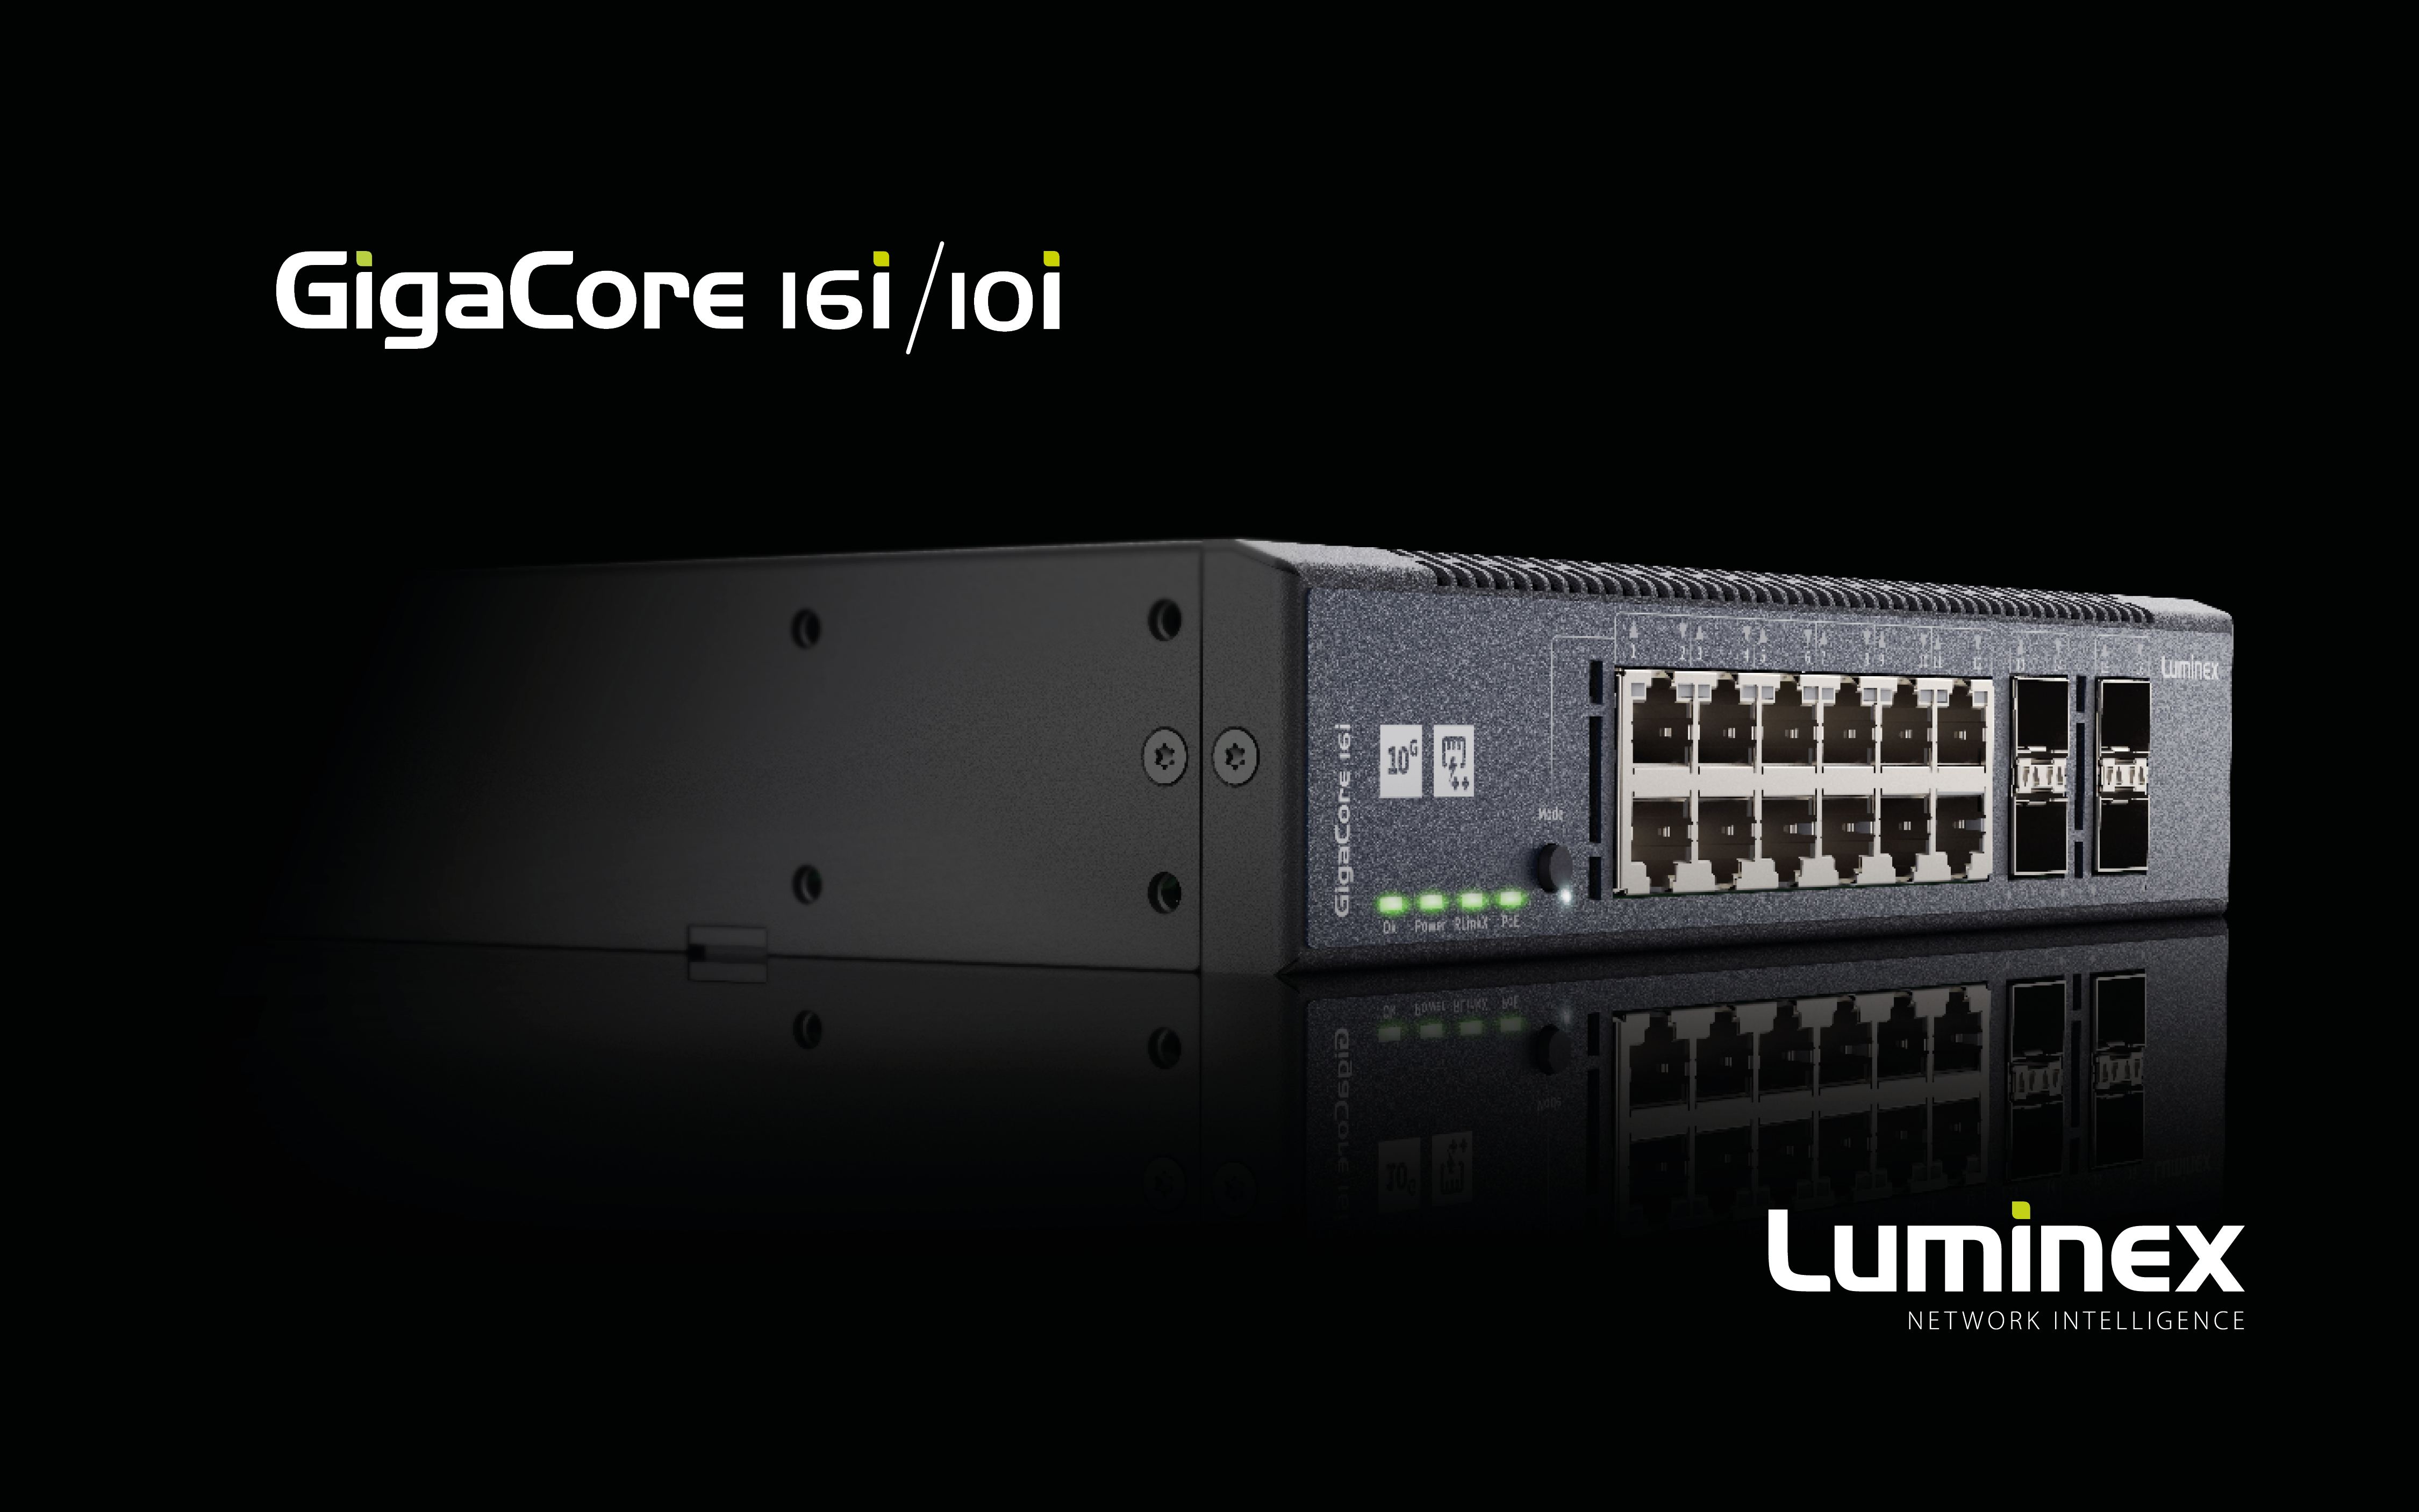 Luminex introduces touring grade GigaCore ethernet switch range at